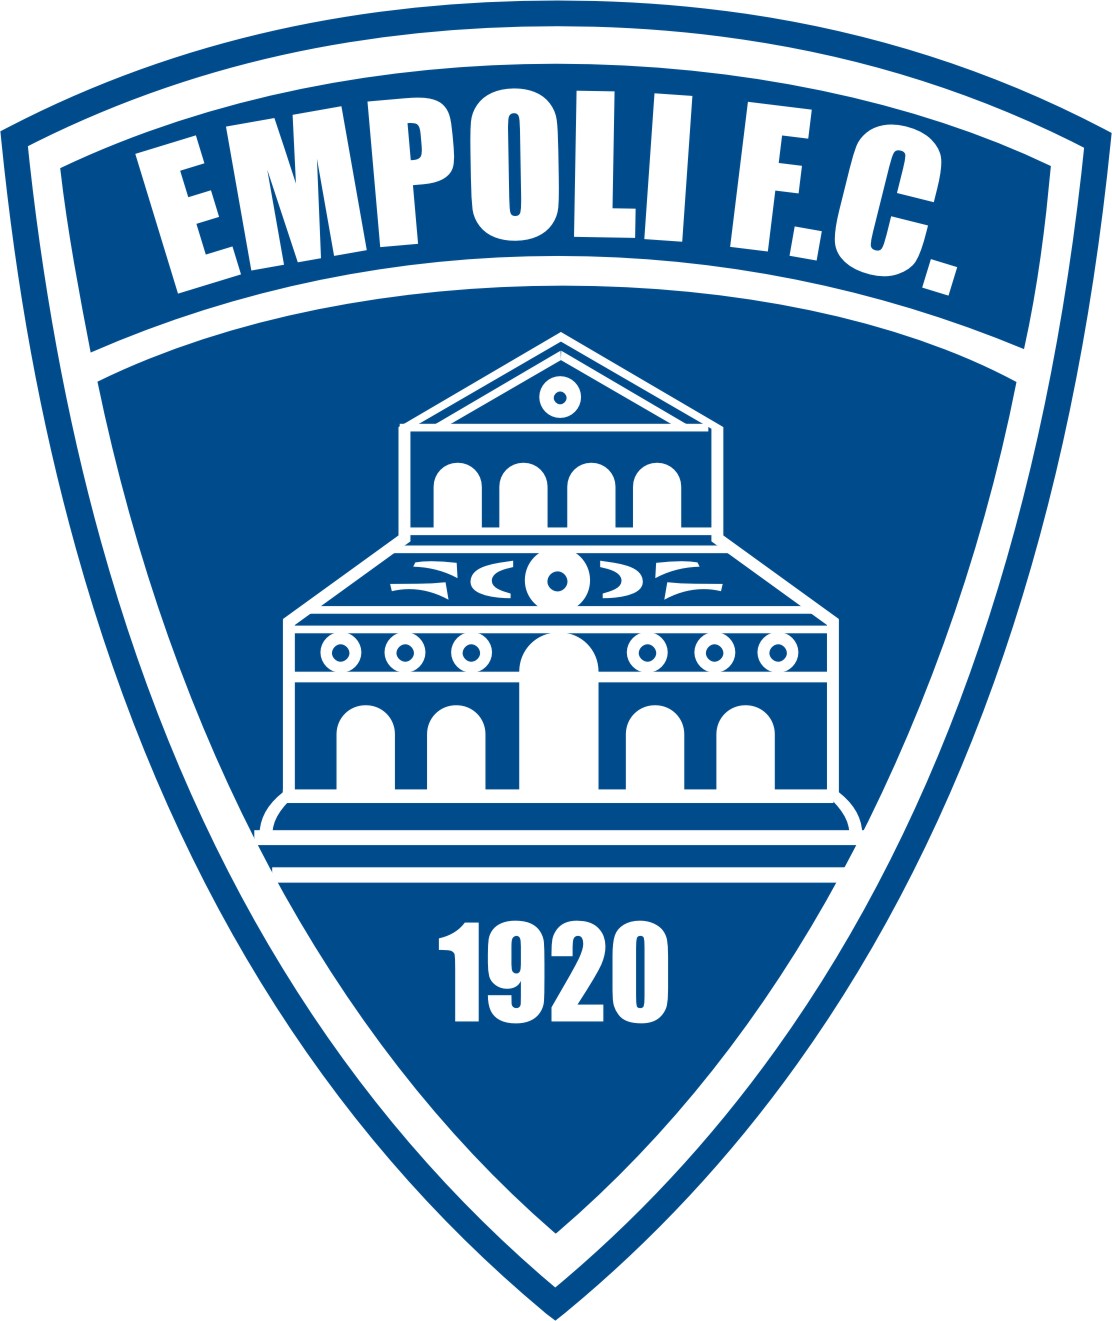 Empoli FC logo.png